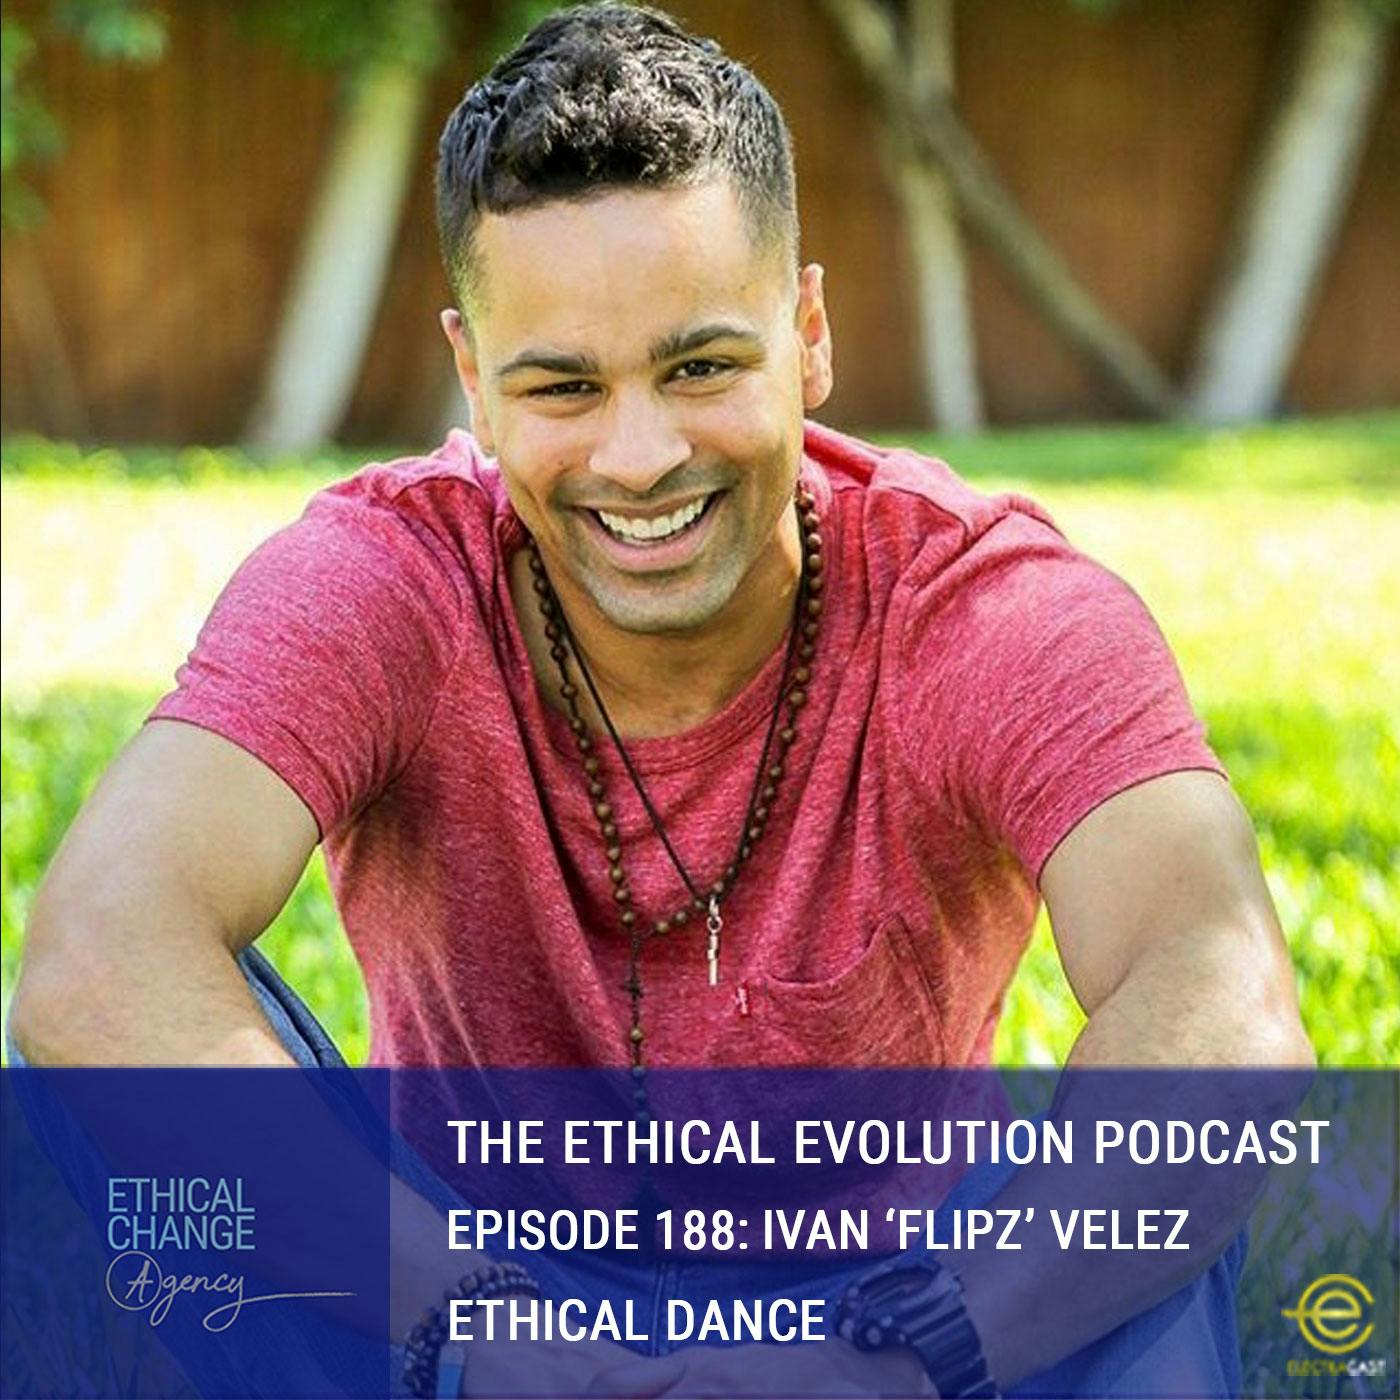 Ethical Dance with Ivan 'Flipz' Velez